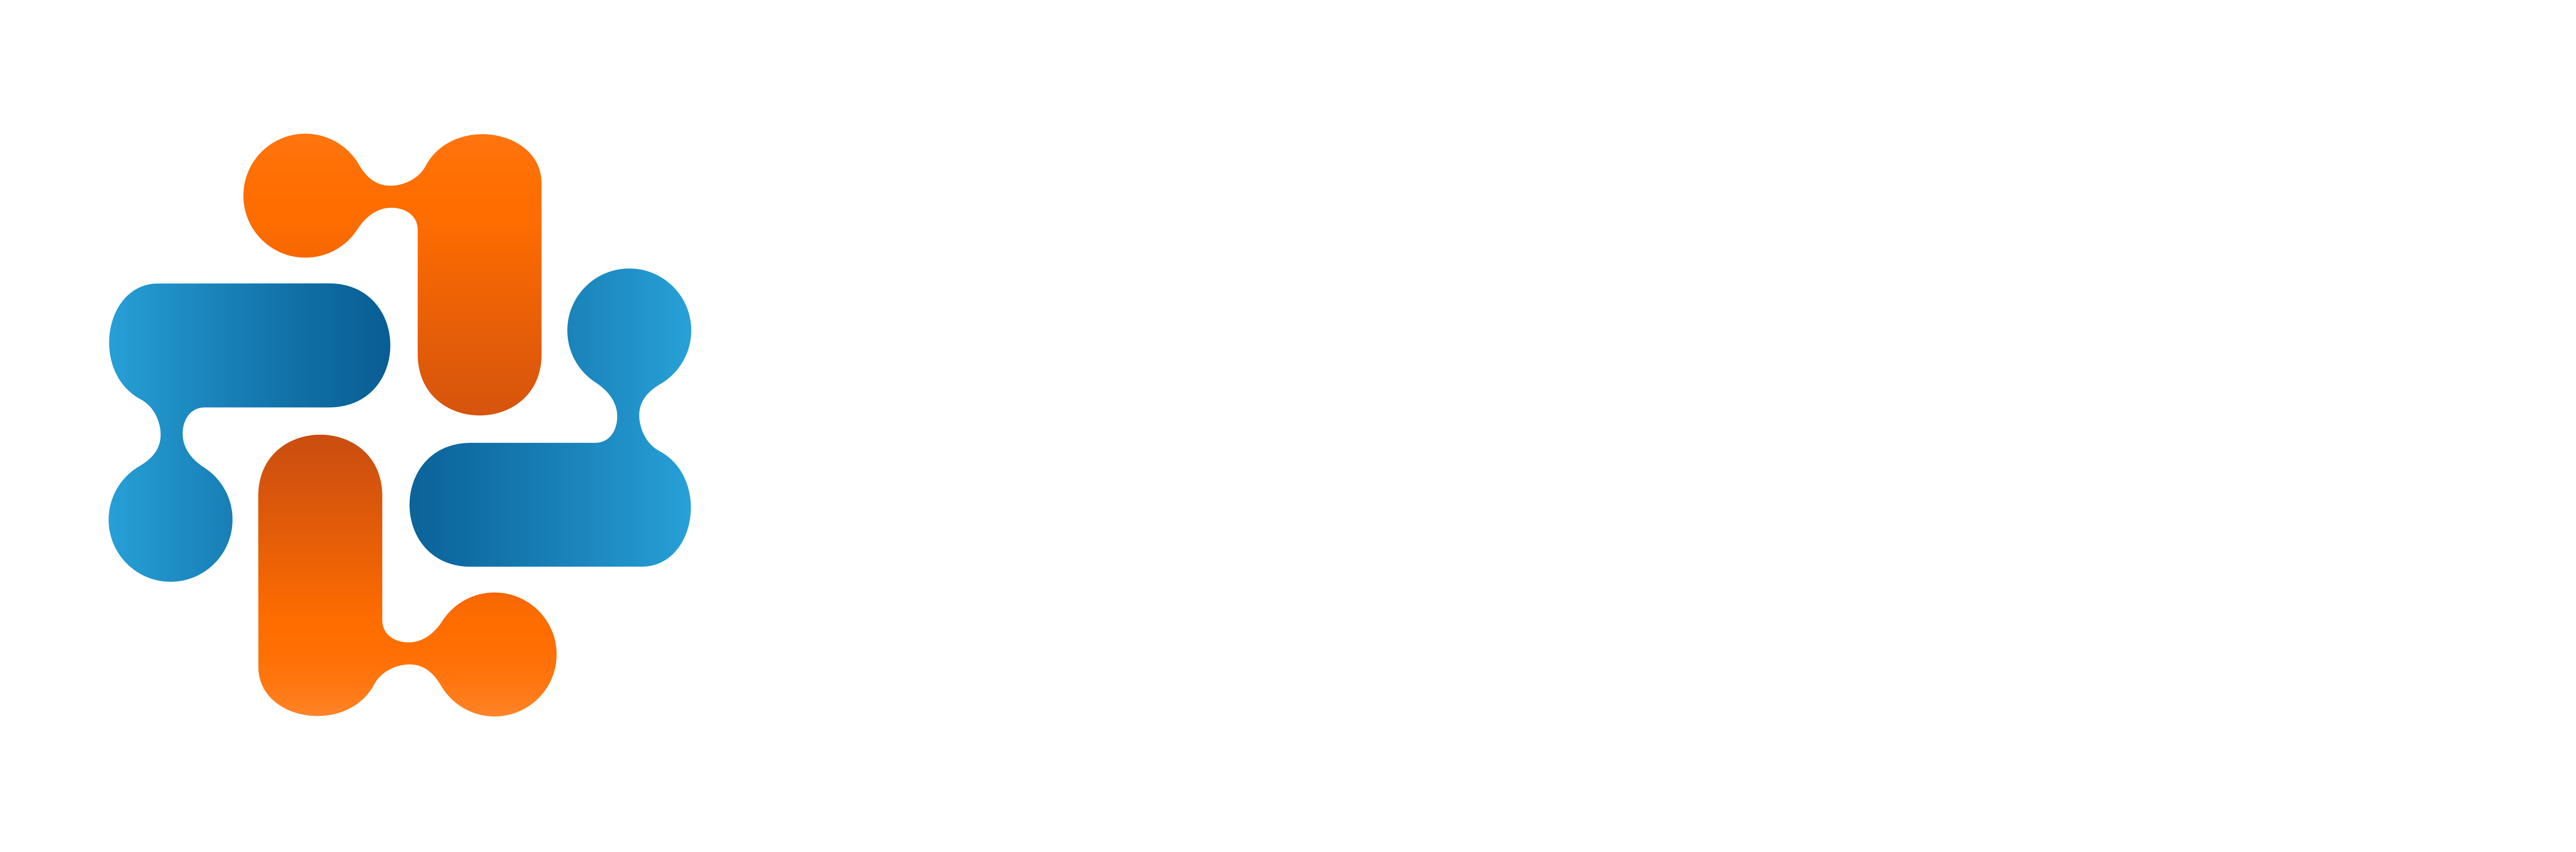 logo CEMDATIC extendidoBN